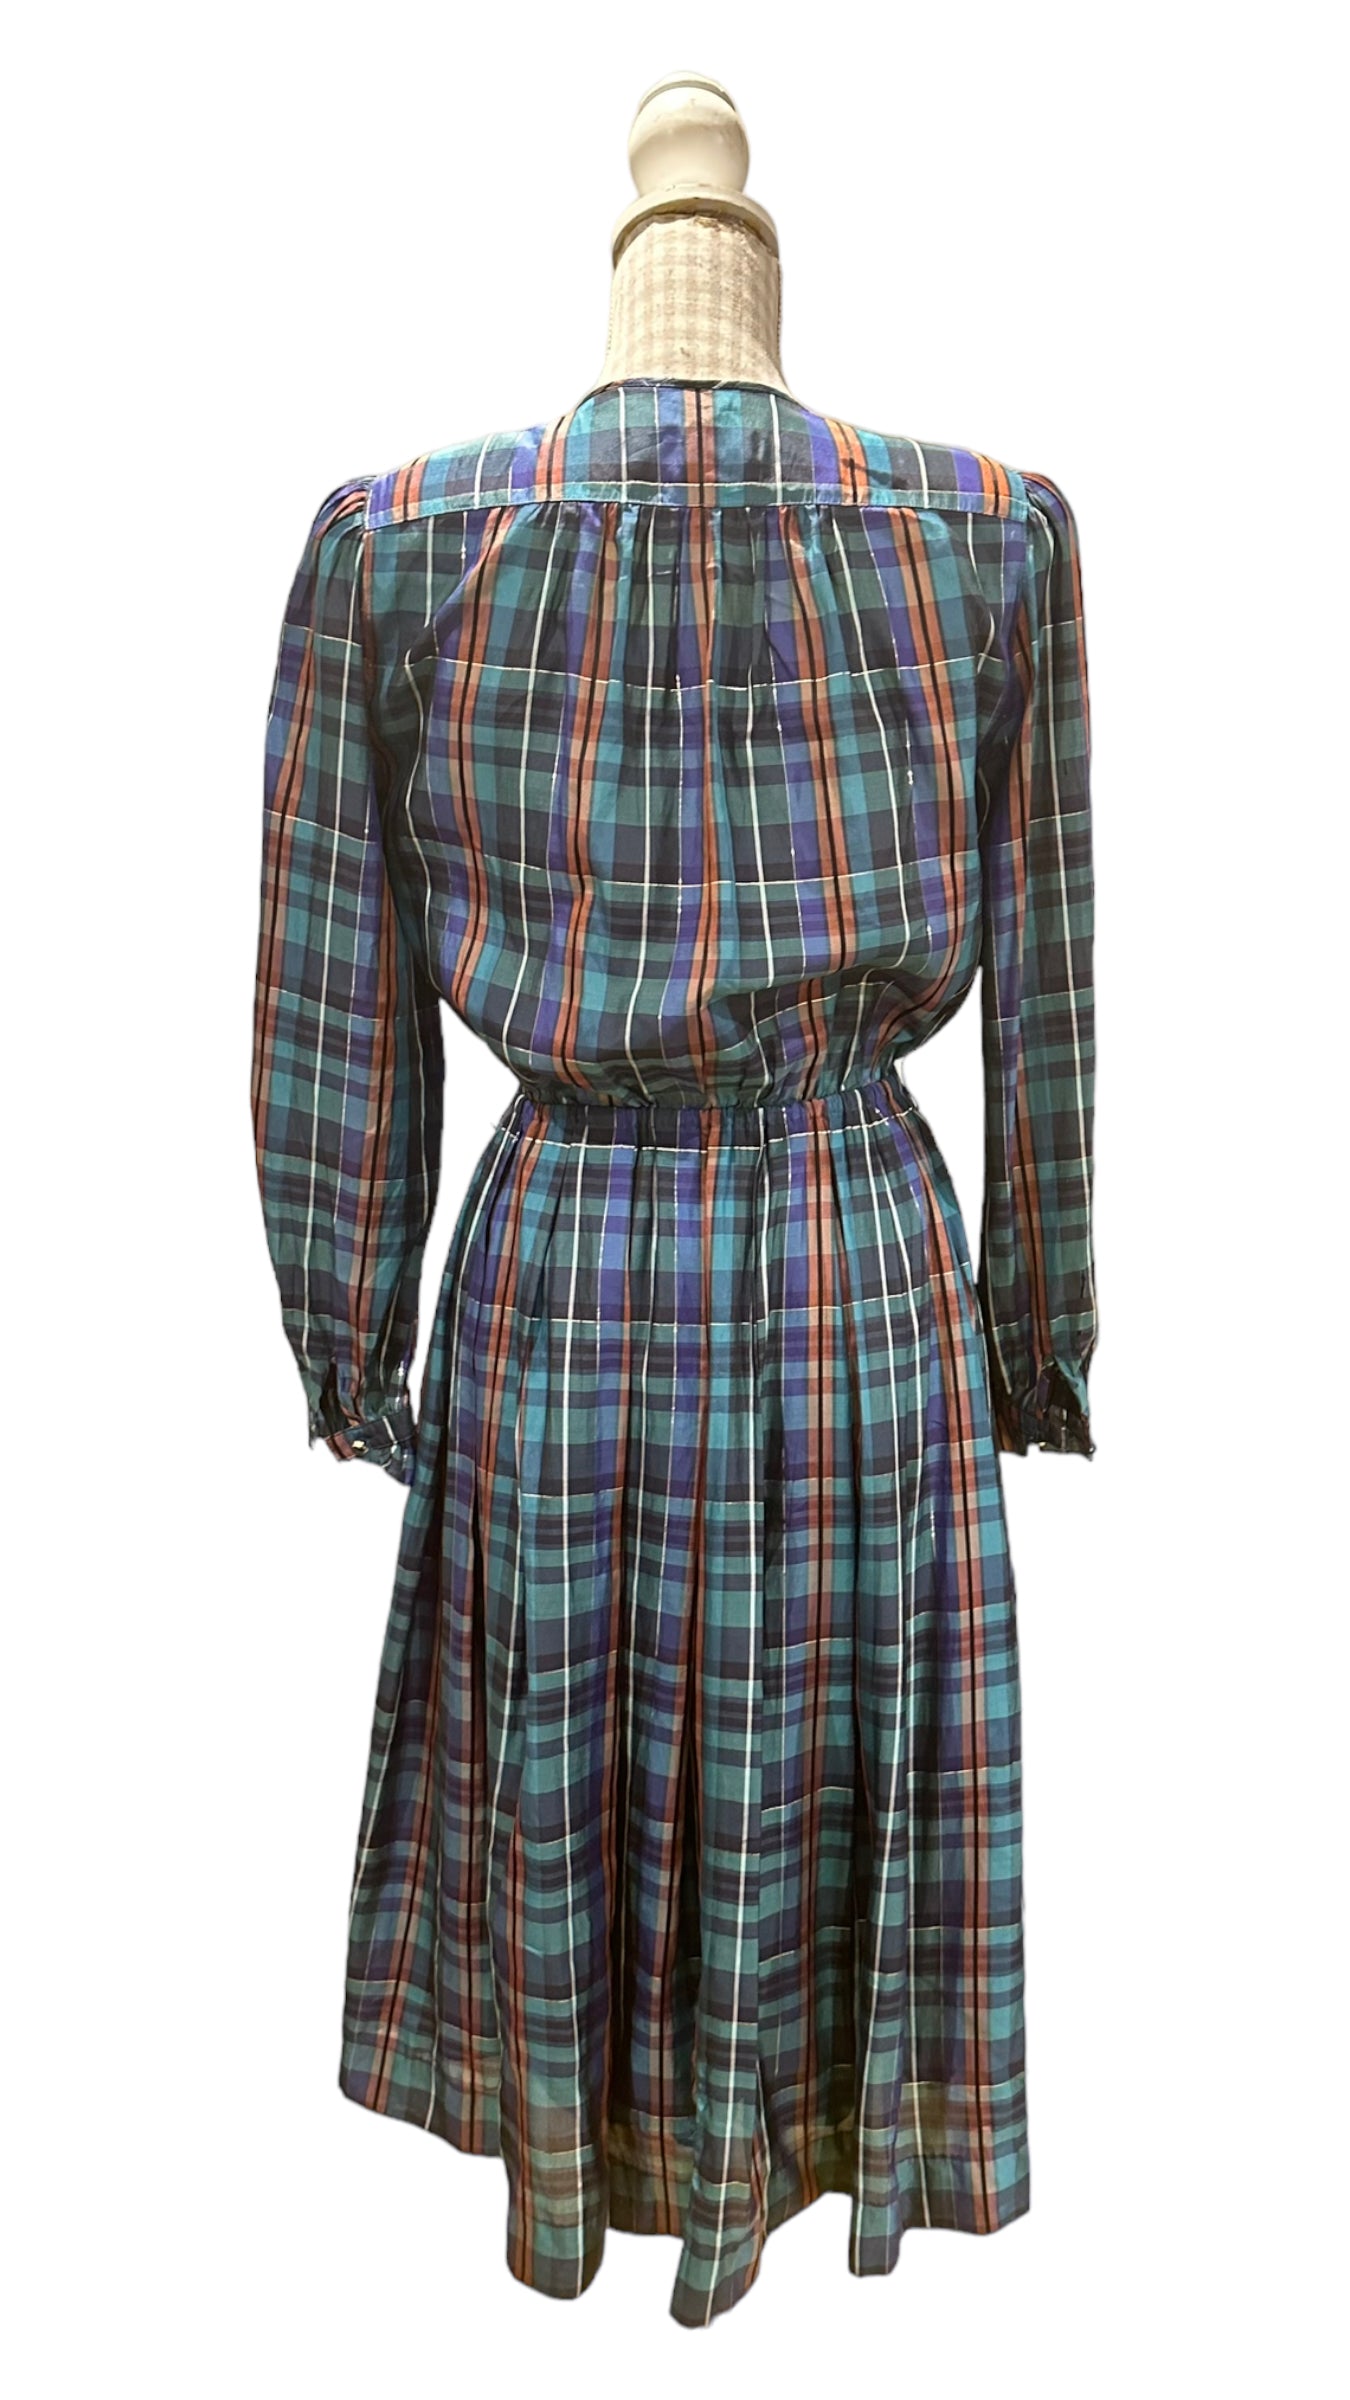 70s Vintage Silk Louis Feraud Dress Size UK 8-10